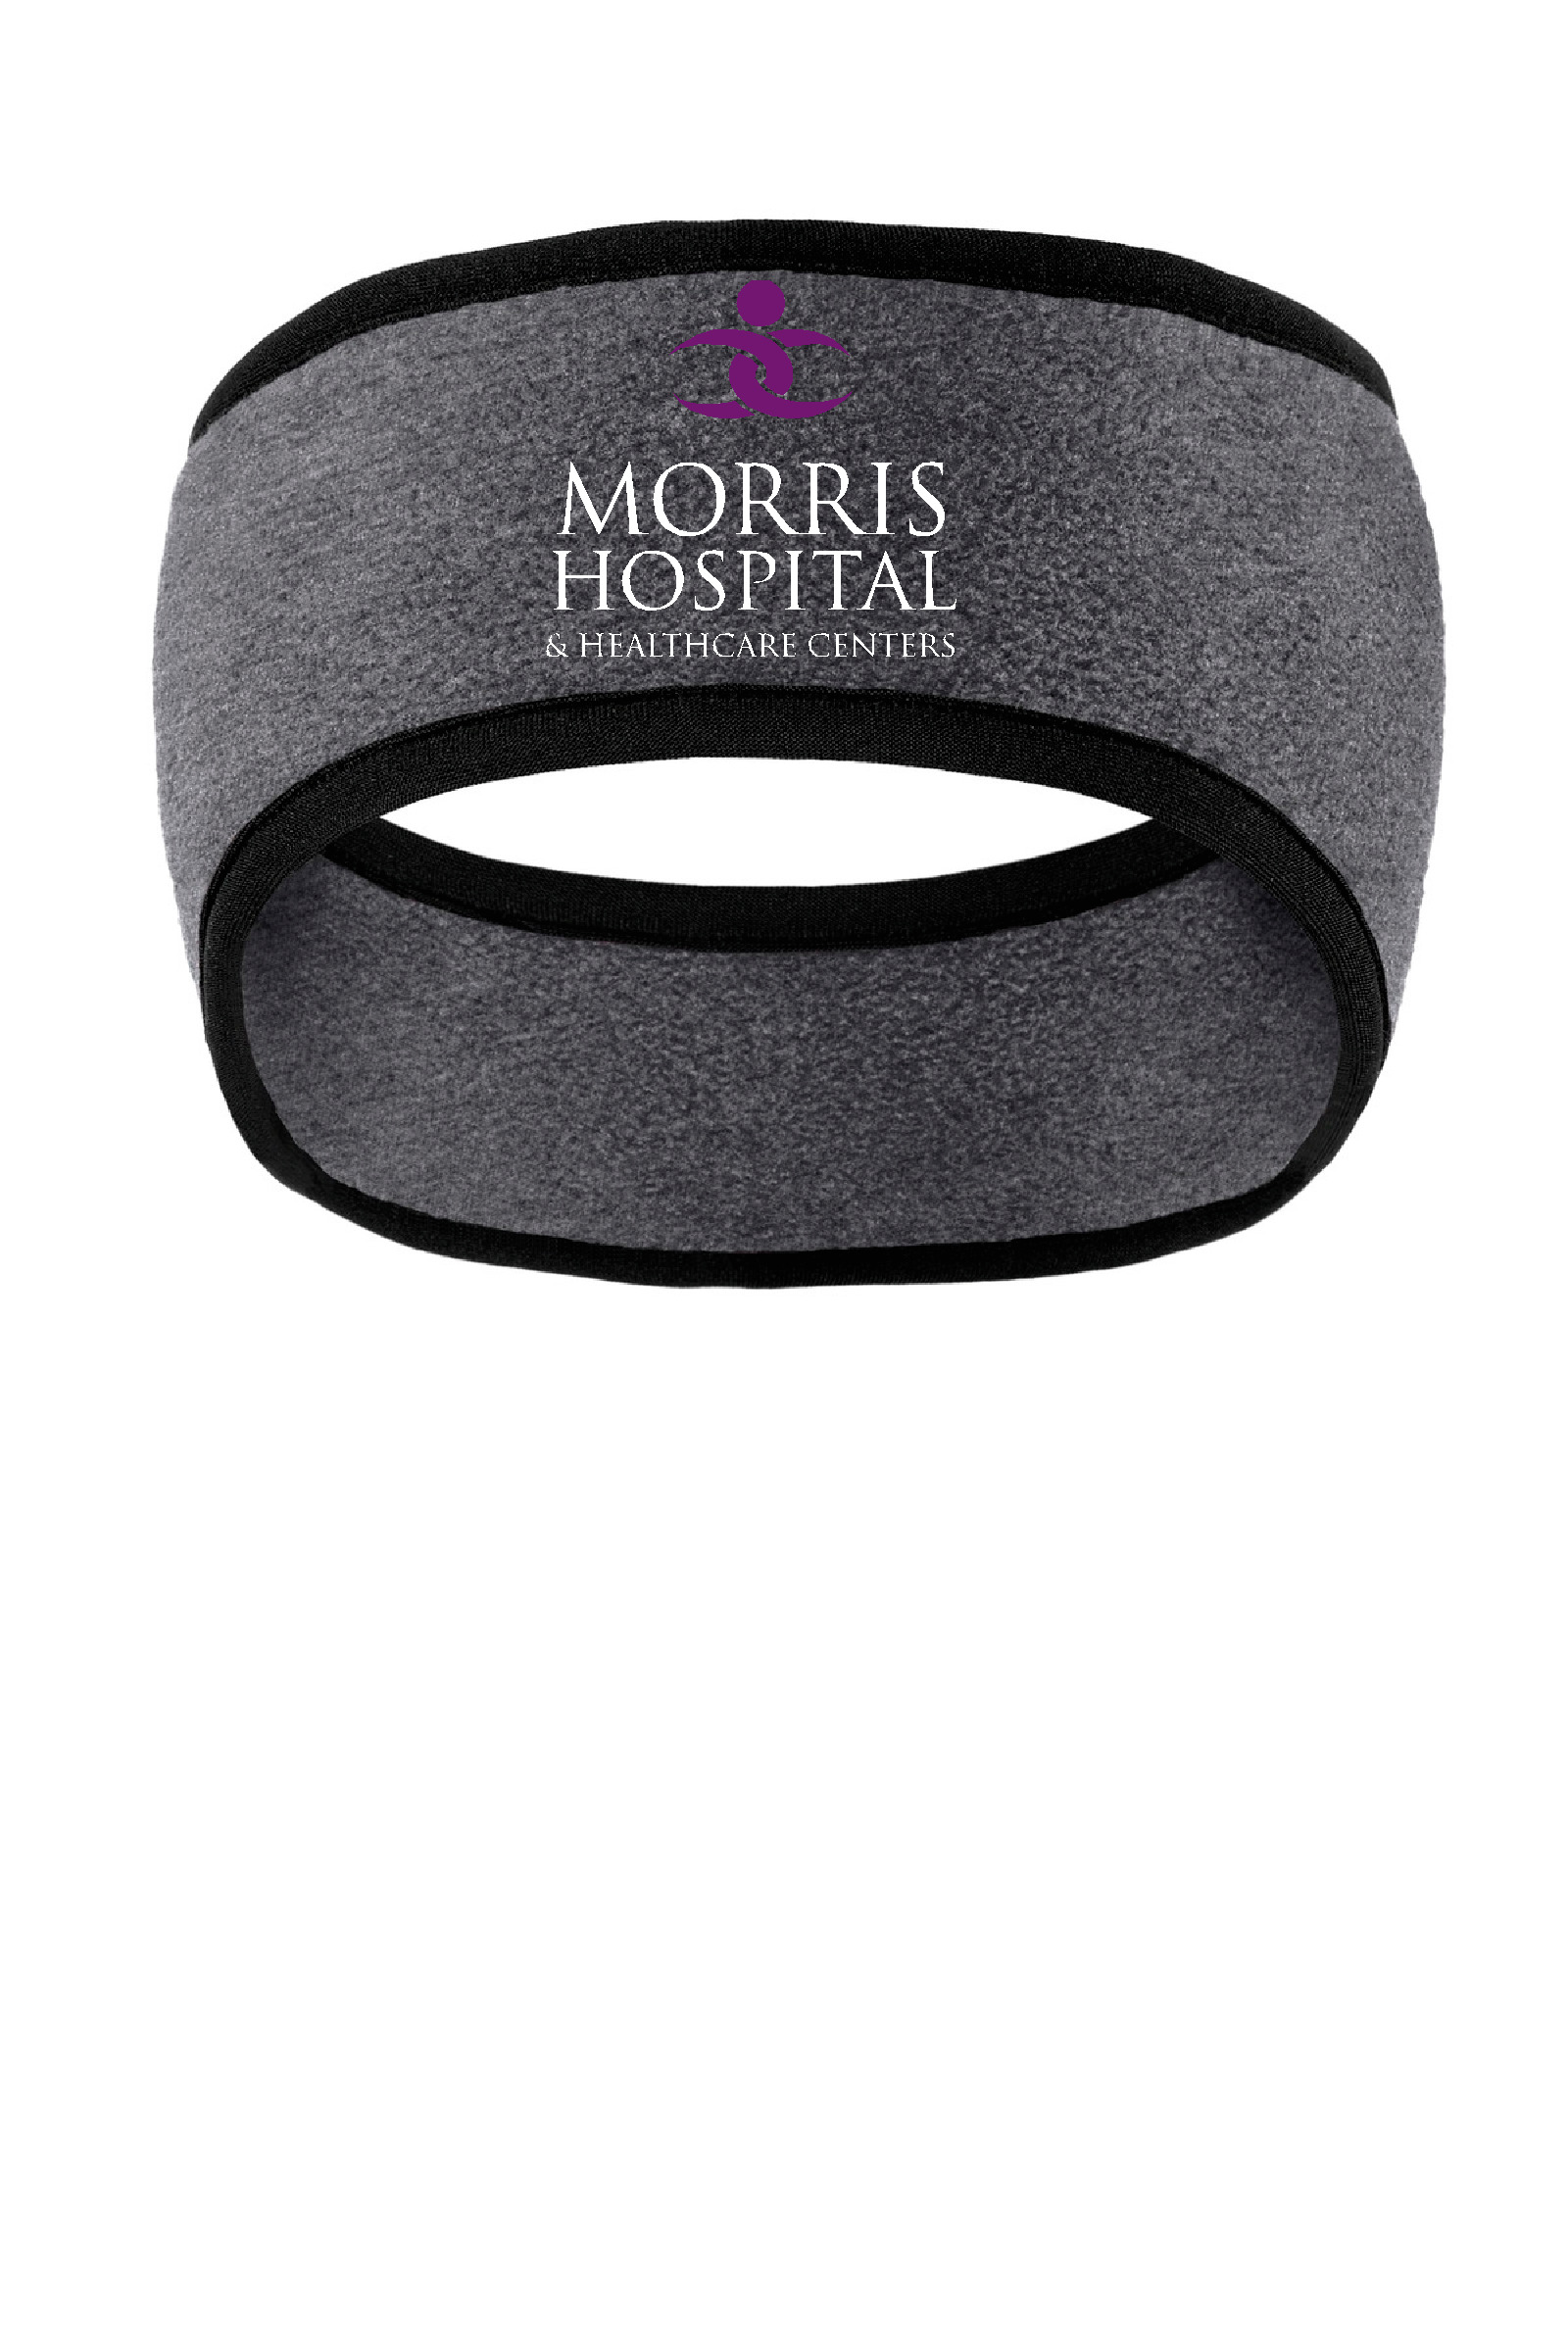 Morris Hospital Fleece Headband-C916 – LogoWorks Design